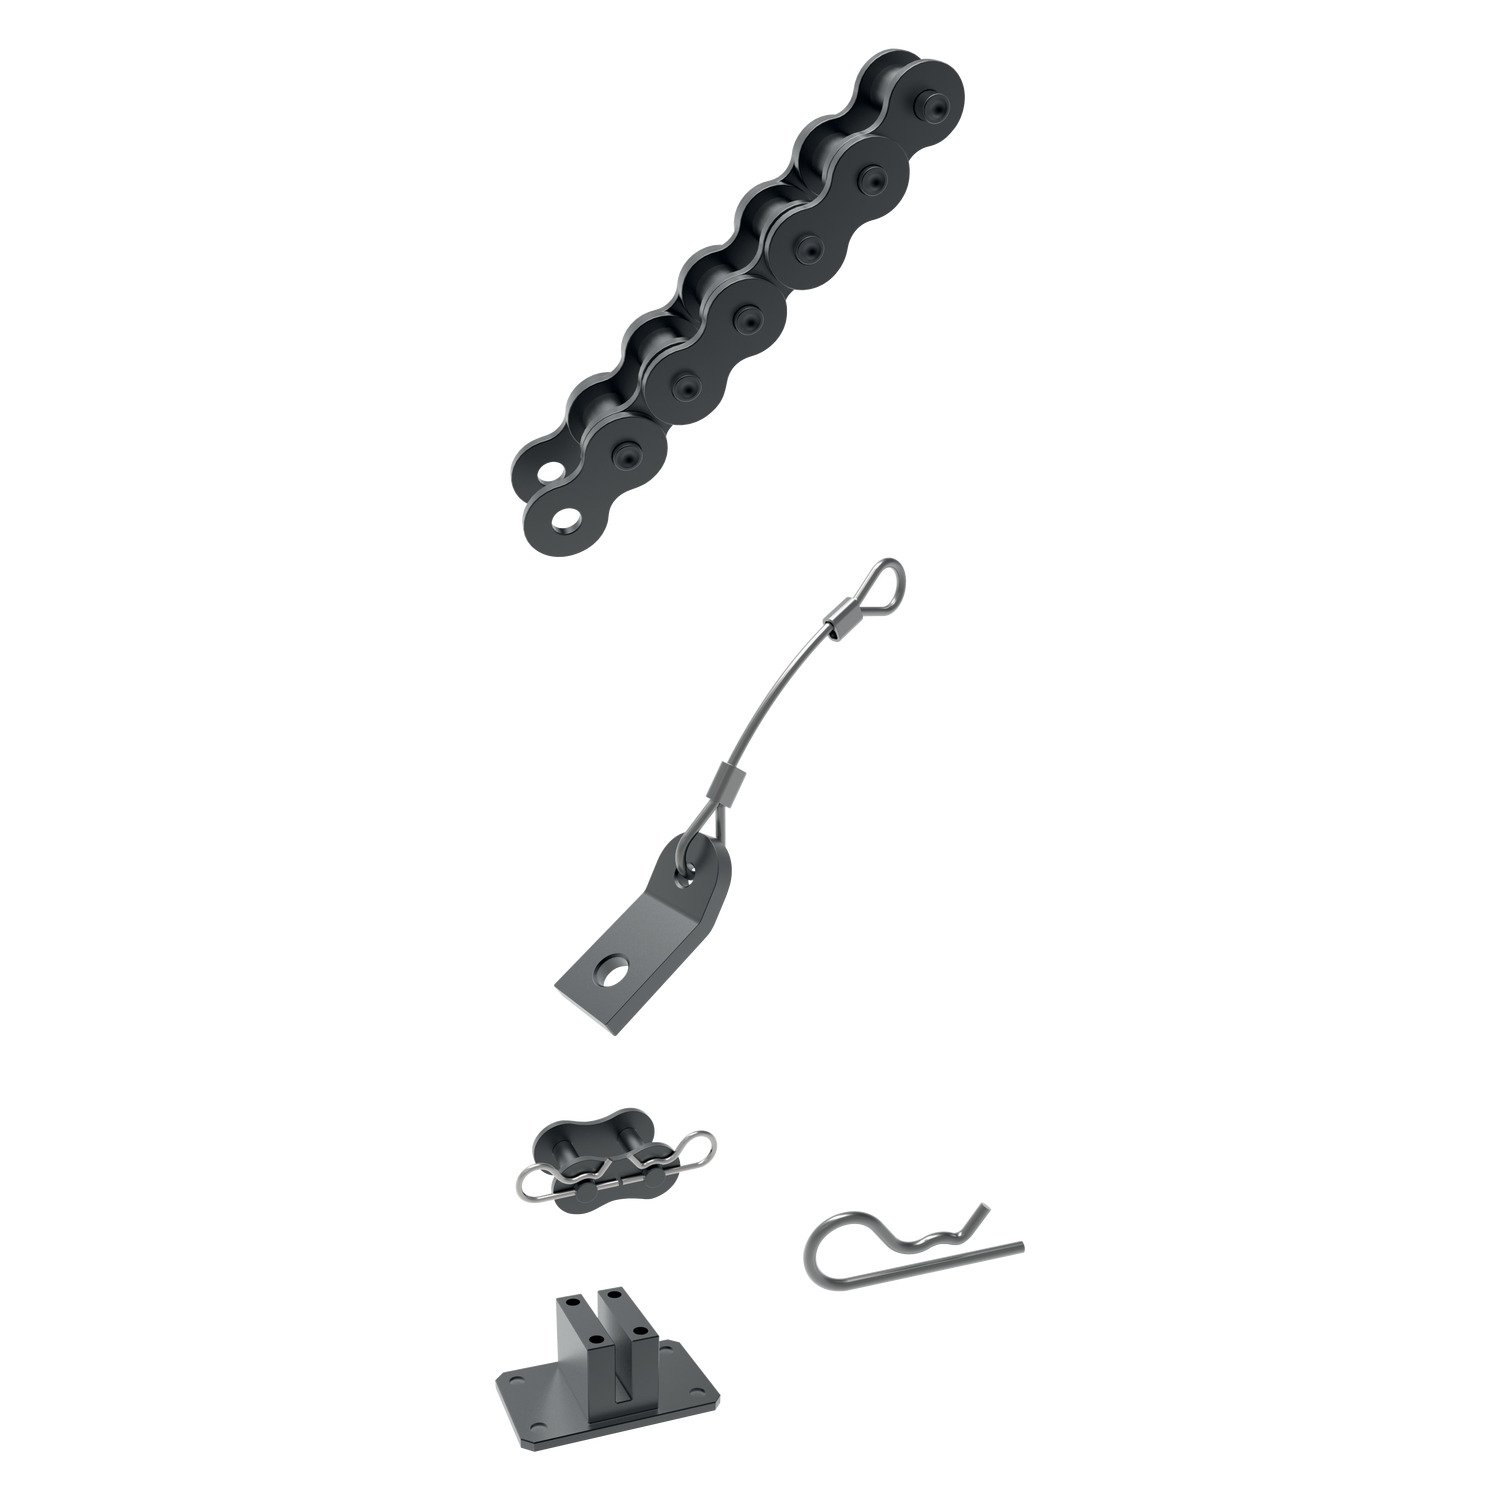 12705 - Chain Clamp Accessories